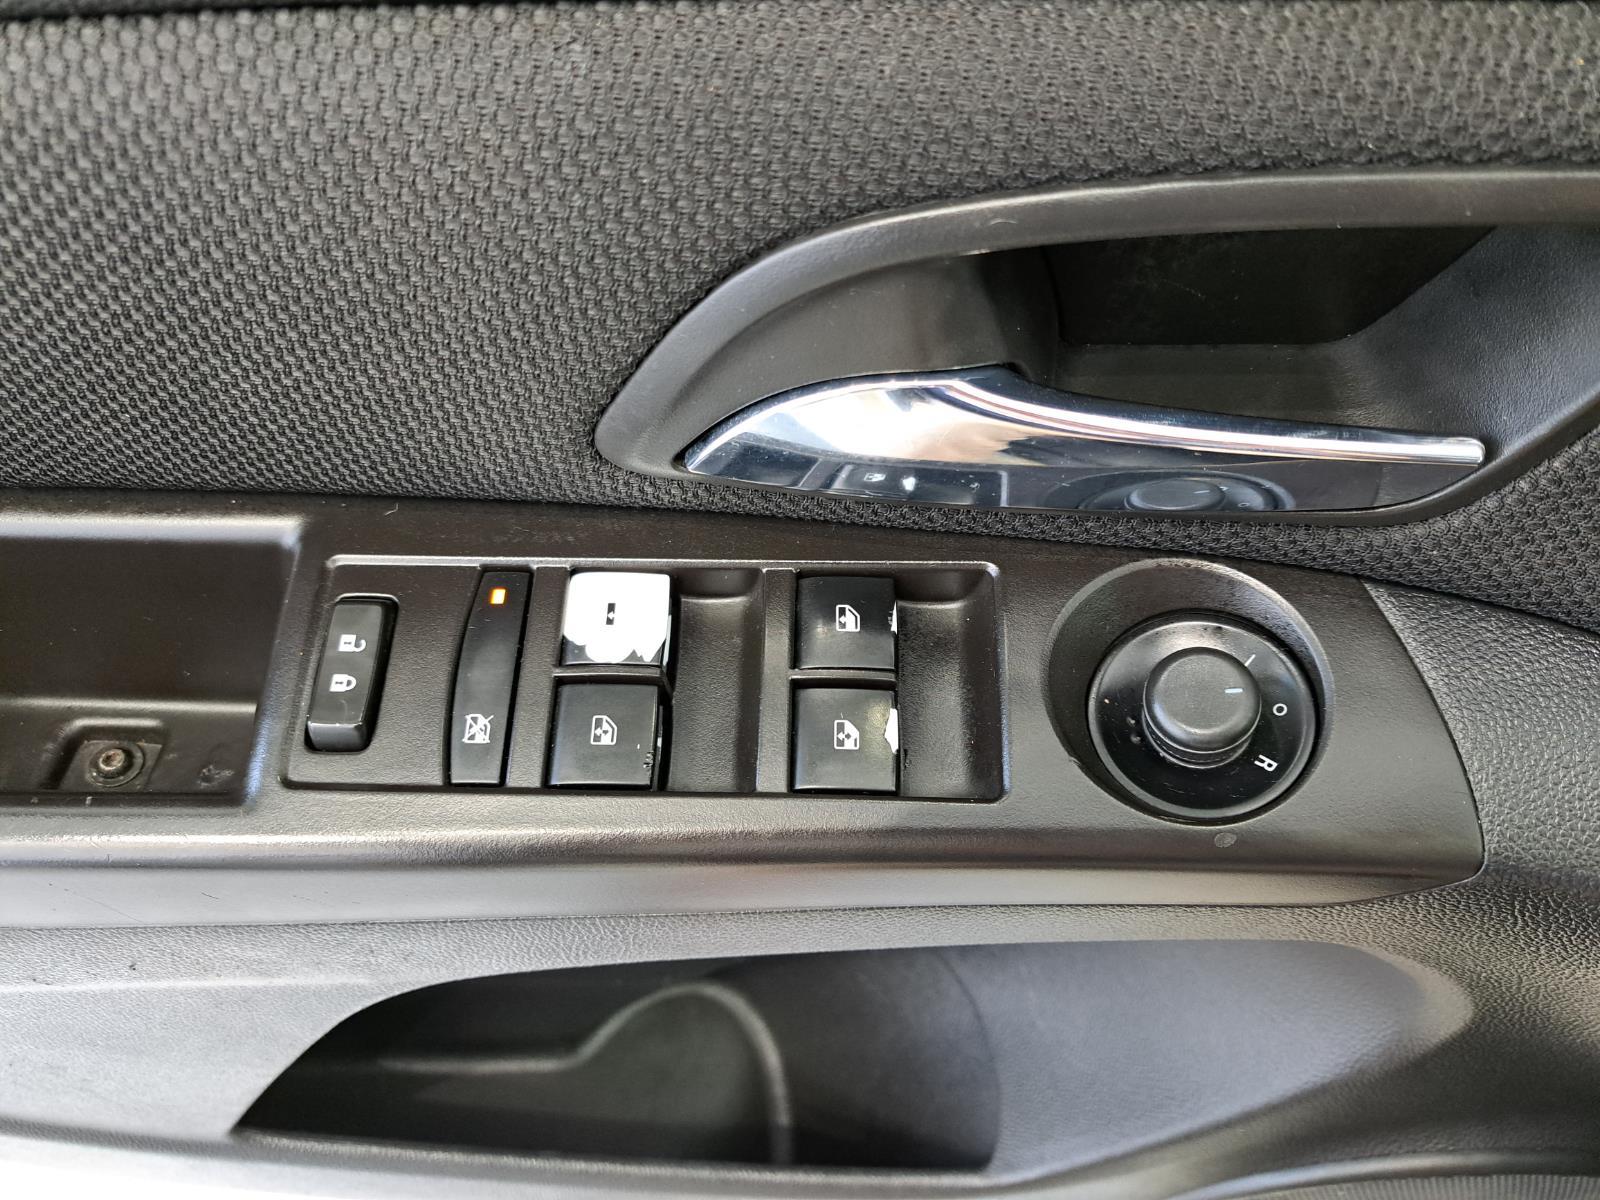 2015 Chevrolet Cruze LT Sedan 4 Dr. Front Wheel Drive mobile thumbnail 24